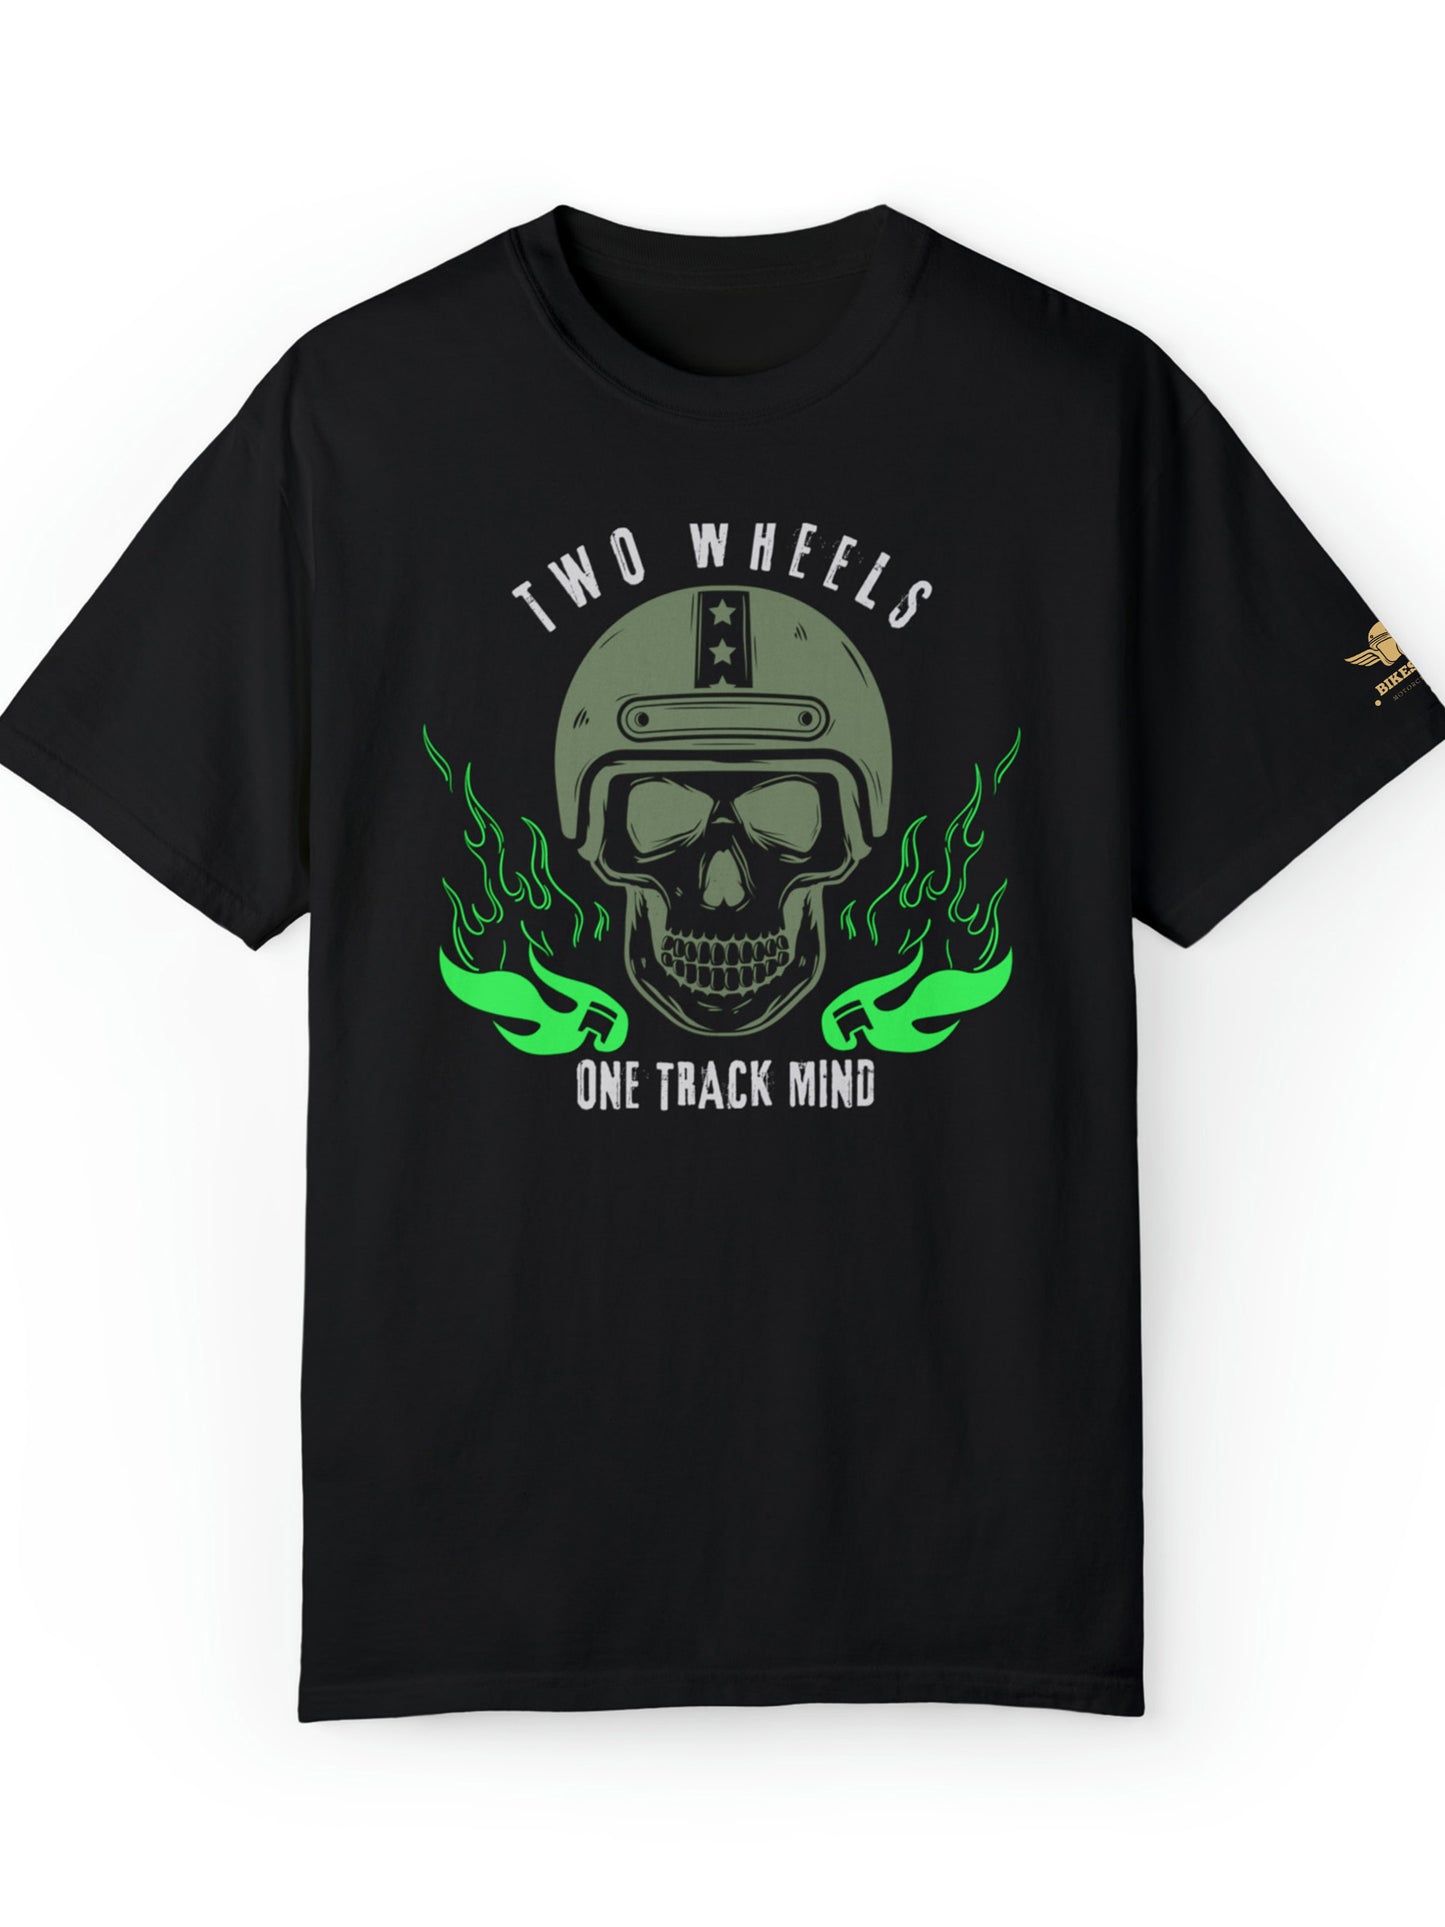 T-Shirt Motorrad Kurzarm schwarz - Two Wheels